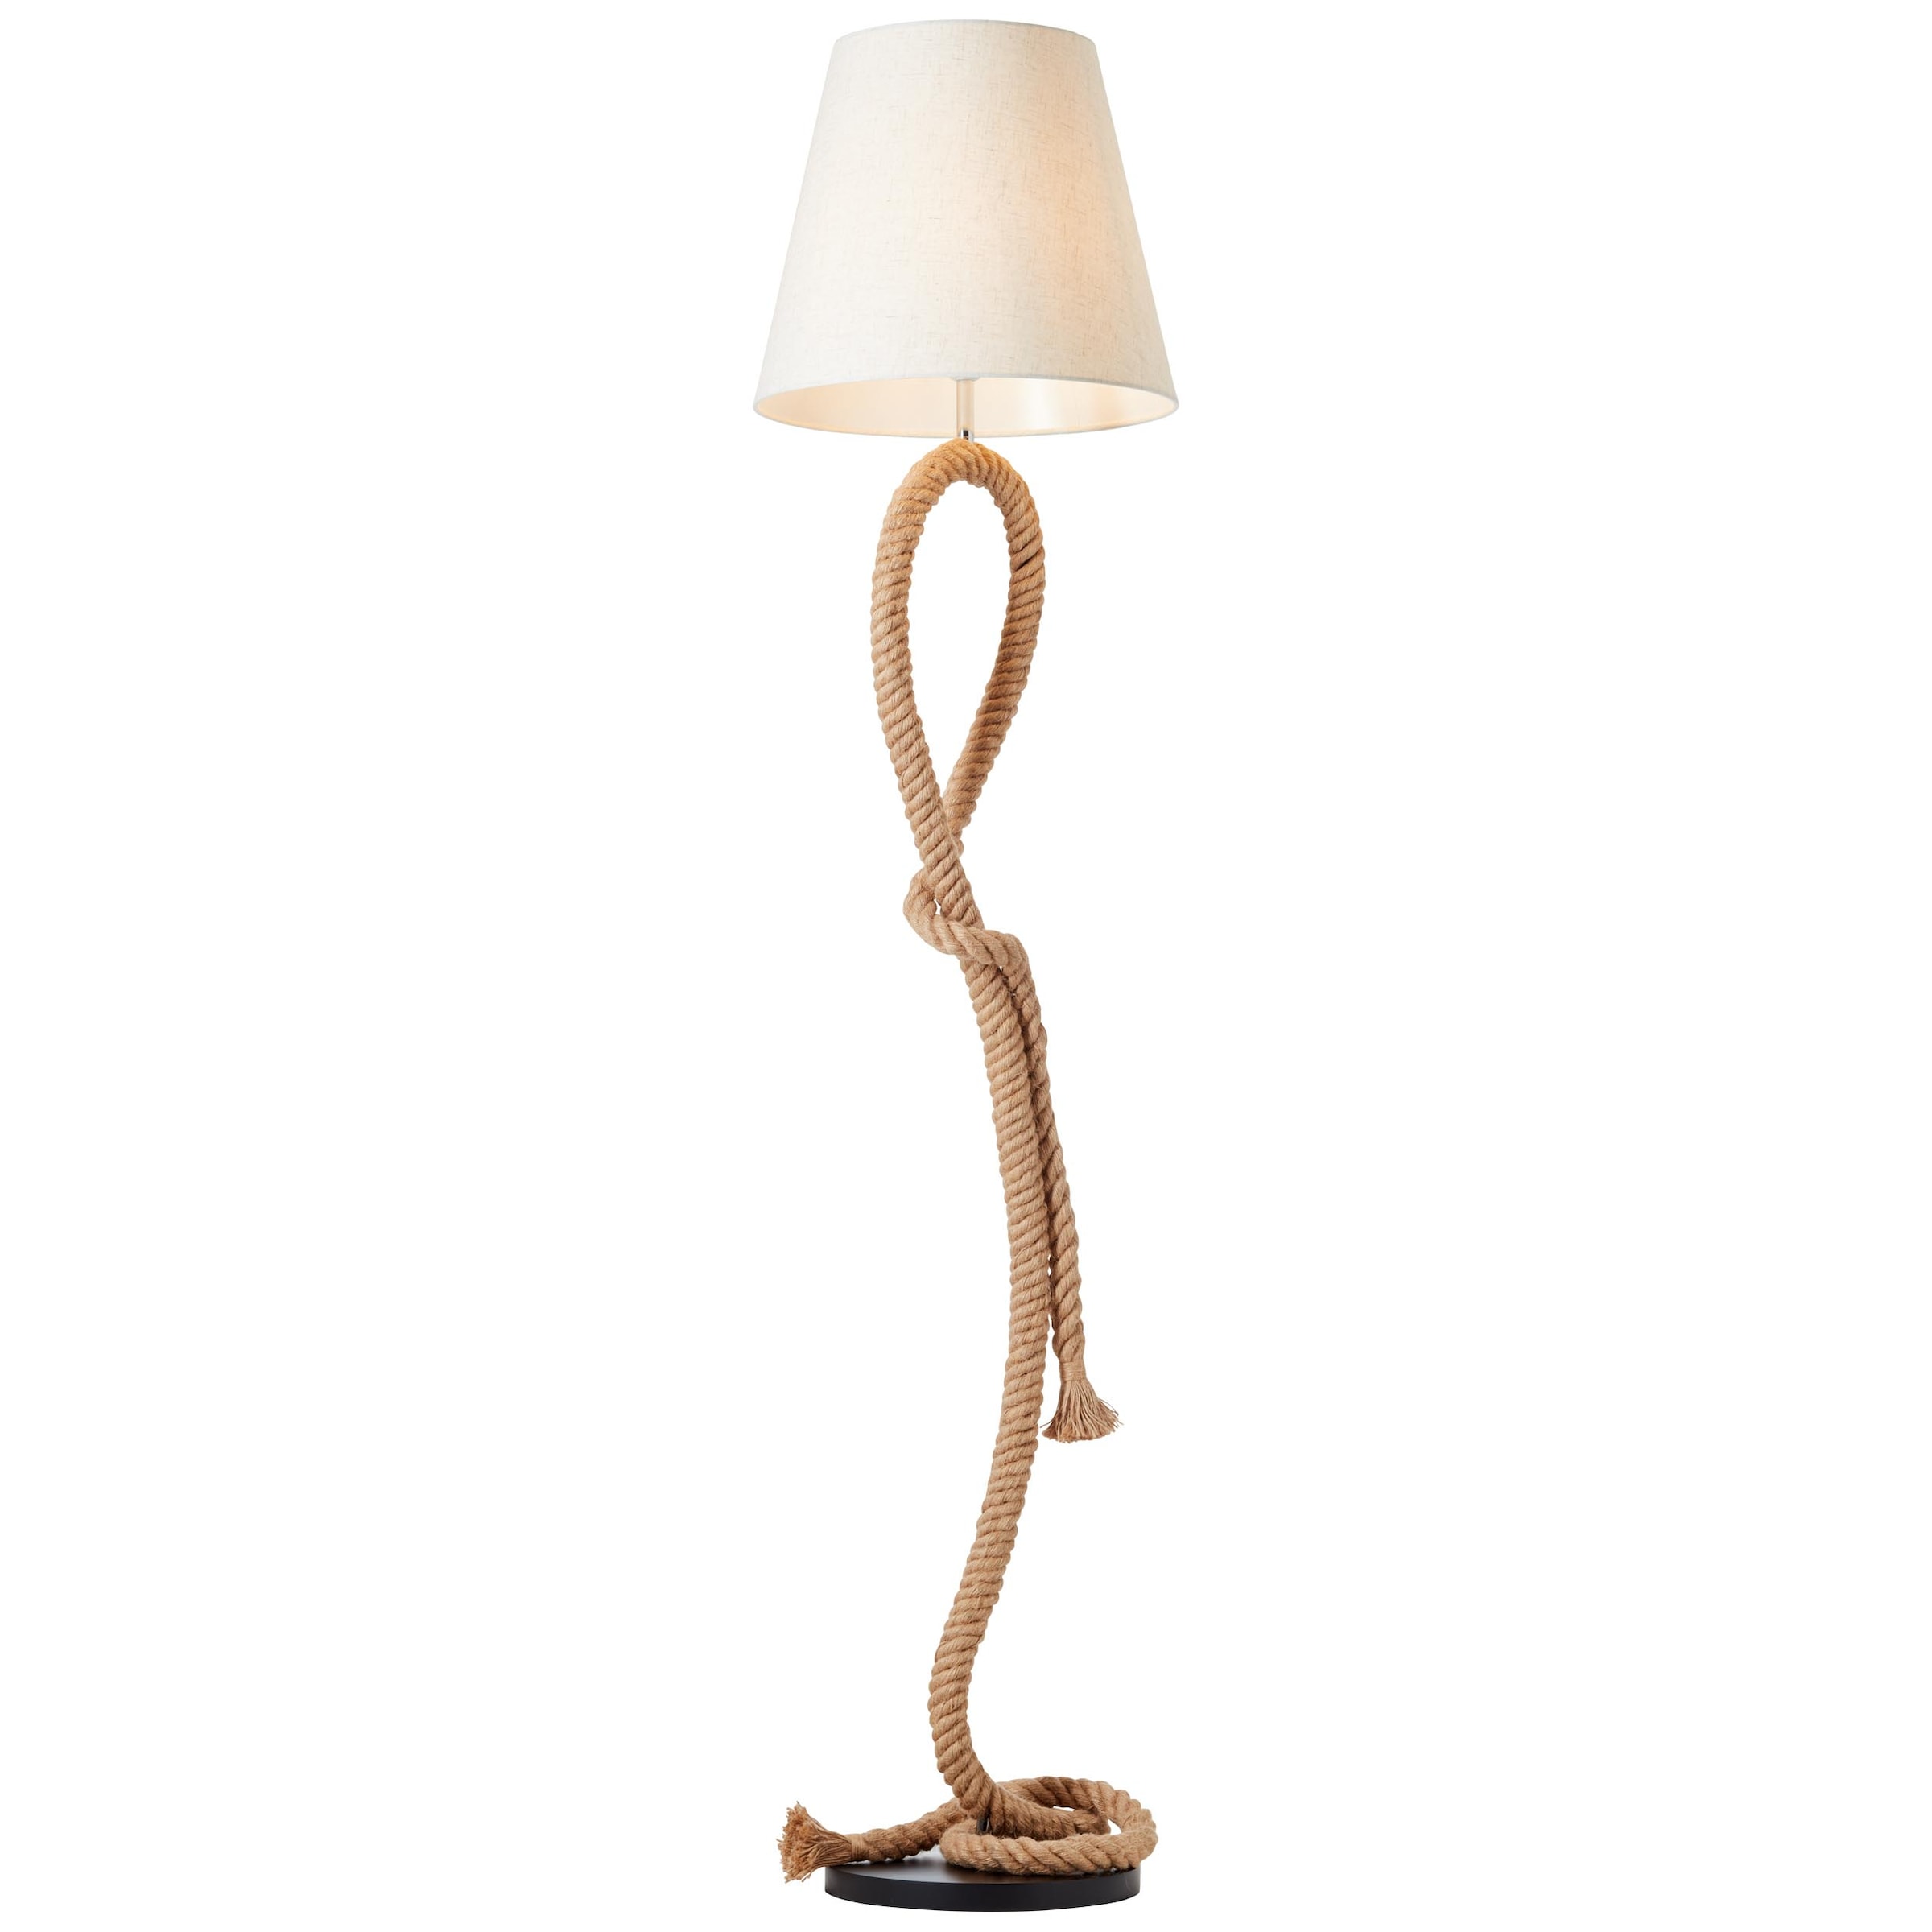 Brilliant Stehlampe »Sailor«, 1 flammig-flammig, 175 cm Höhe, Ø 40 cm, E27,  Seil/Textil/Metall, natur/weiss kaufen